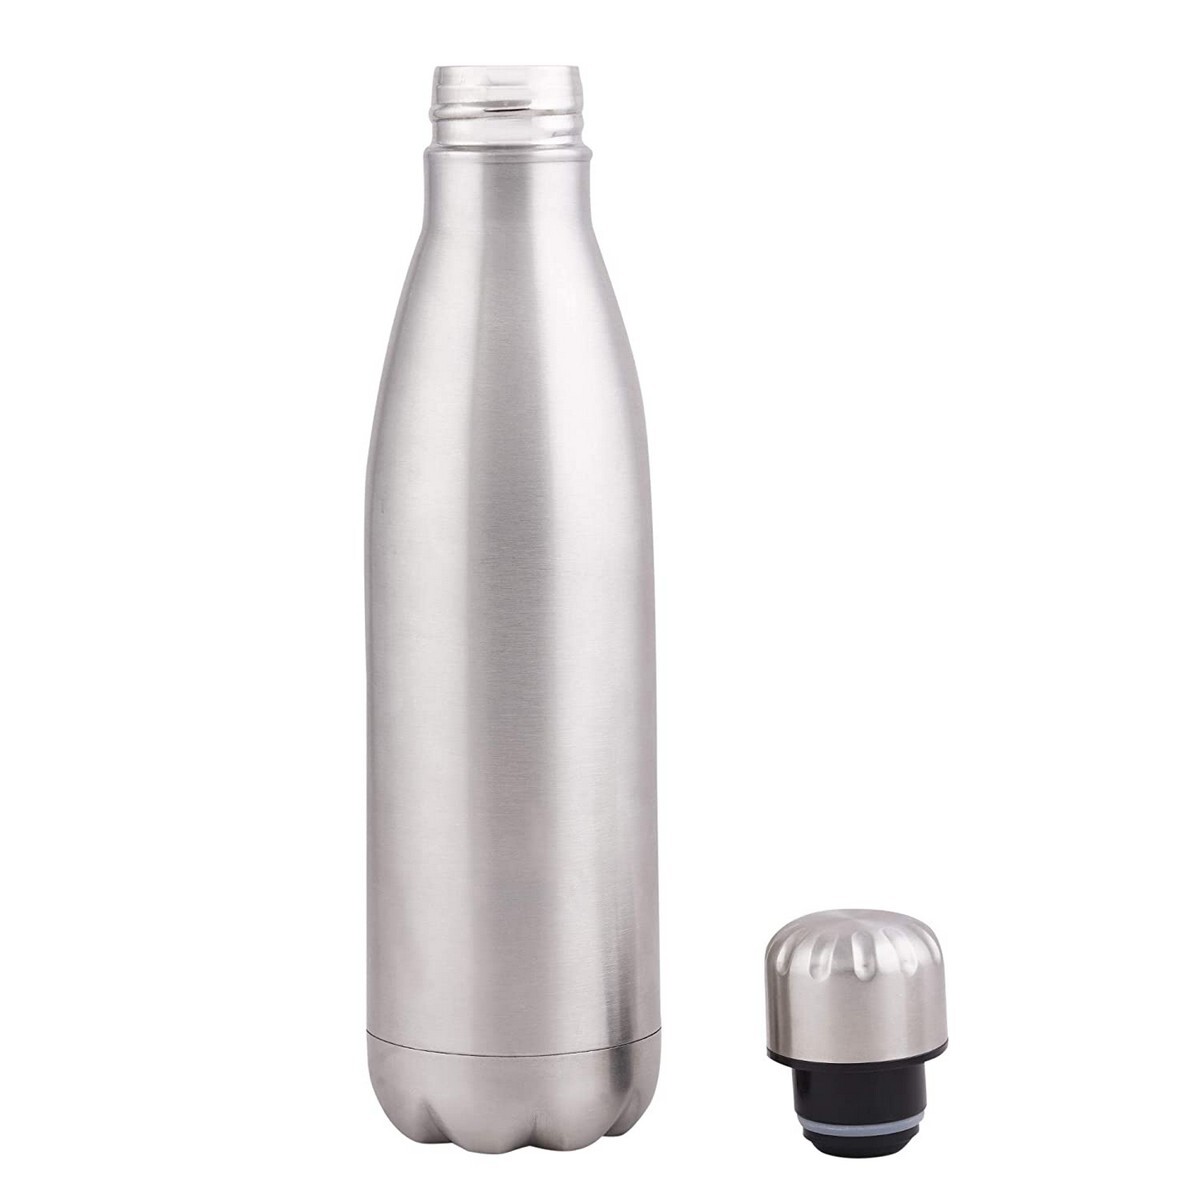 Pearlpet Thermal Flask 1000ml